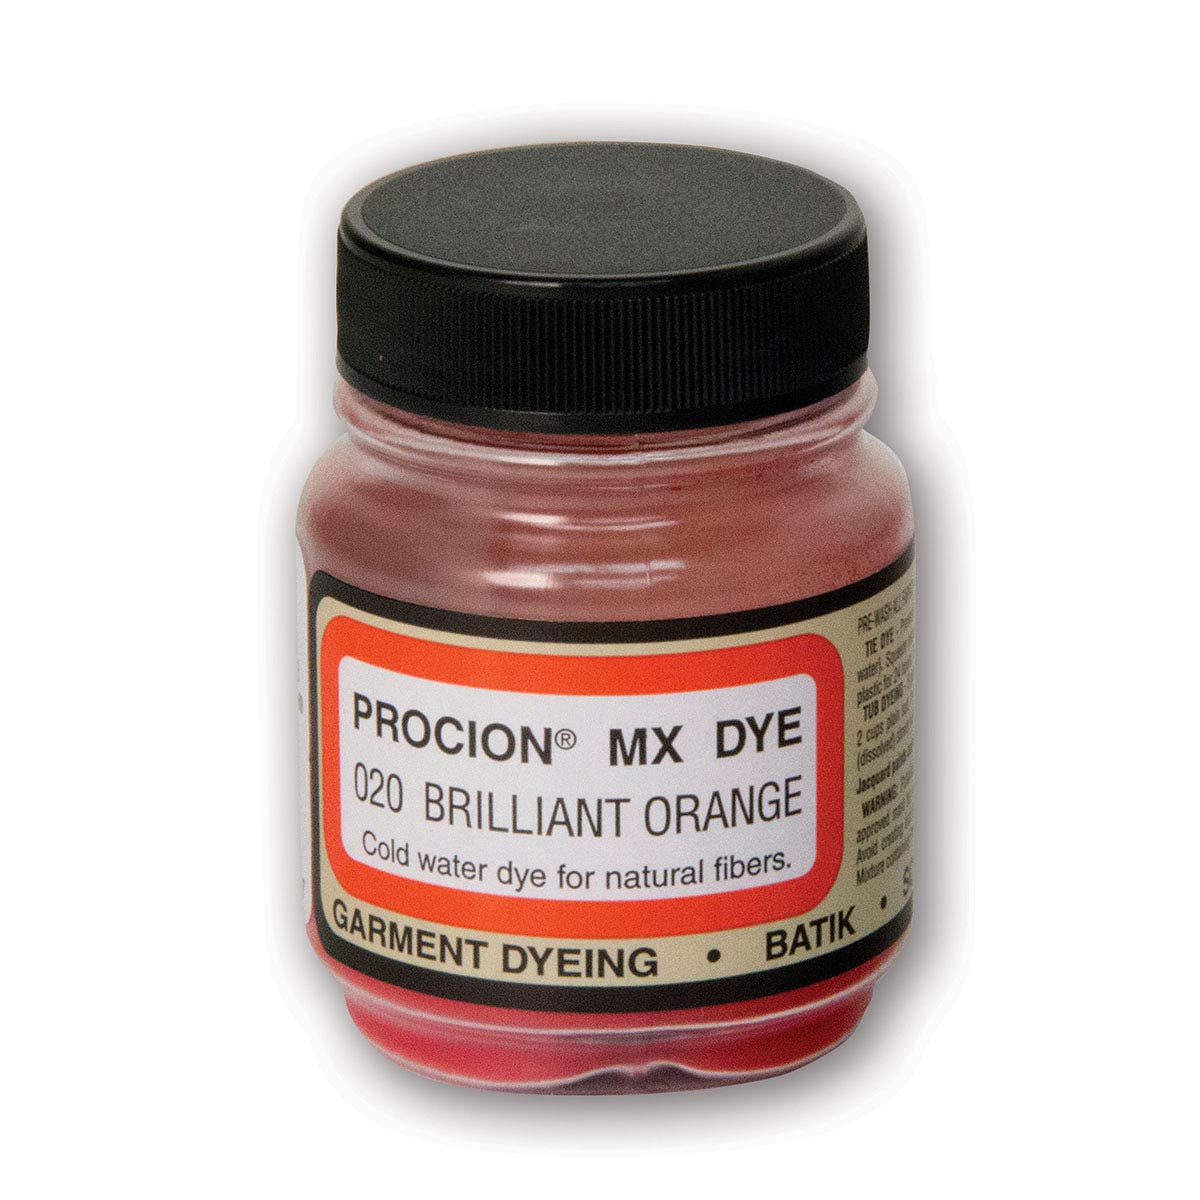 Jacquard - Procion MX Dye - Fabric Textile - Fel oranje 020